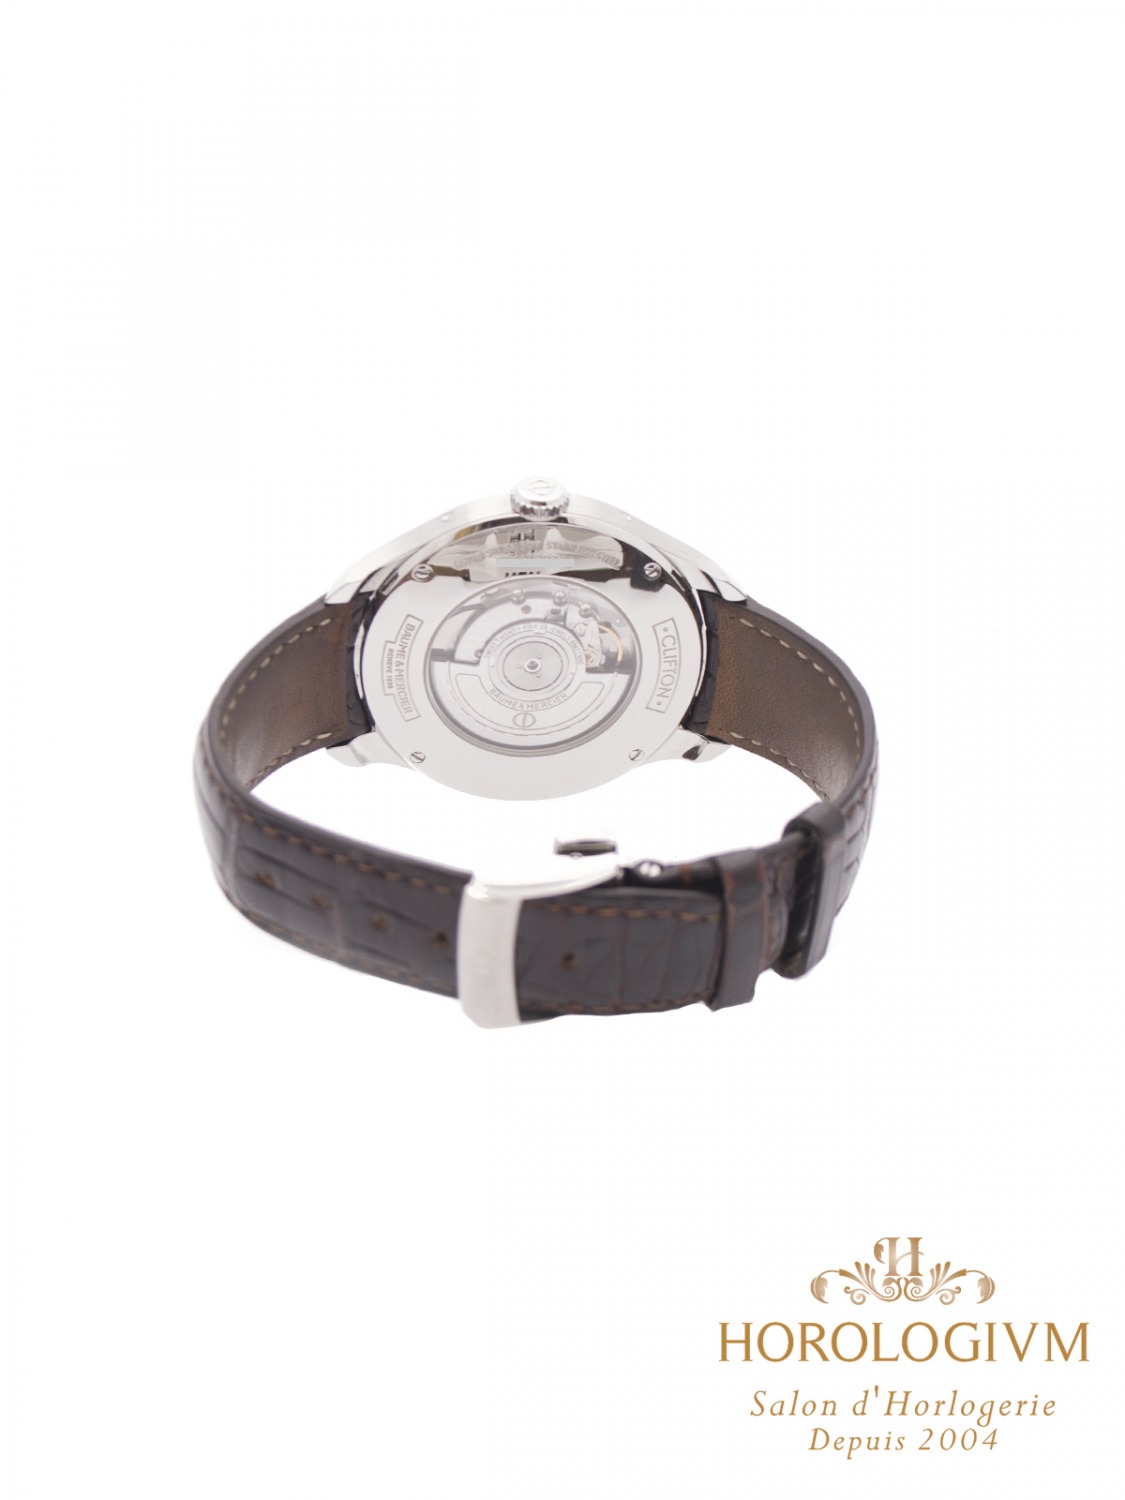 Baume & Mercier Clifton Ref. 65718 watch, silver